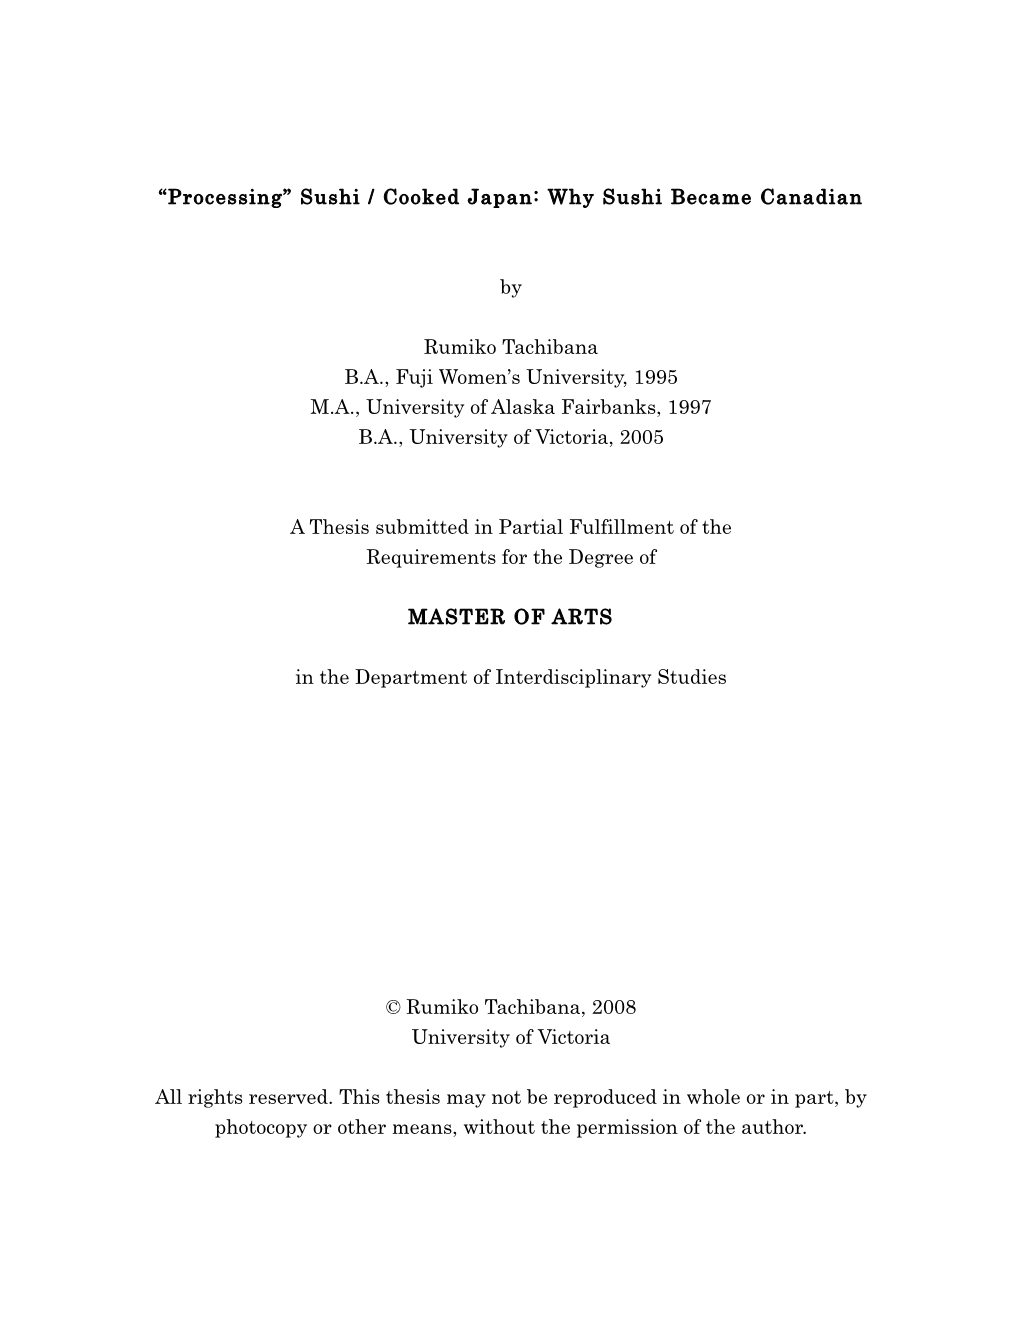 Why Sushi Became Canadian by Rumiko Tachibana BA, Fuji